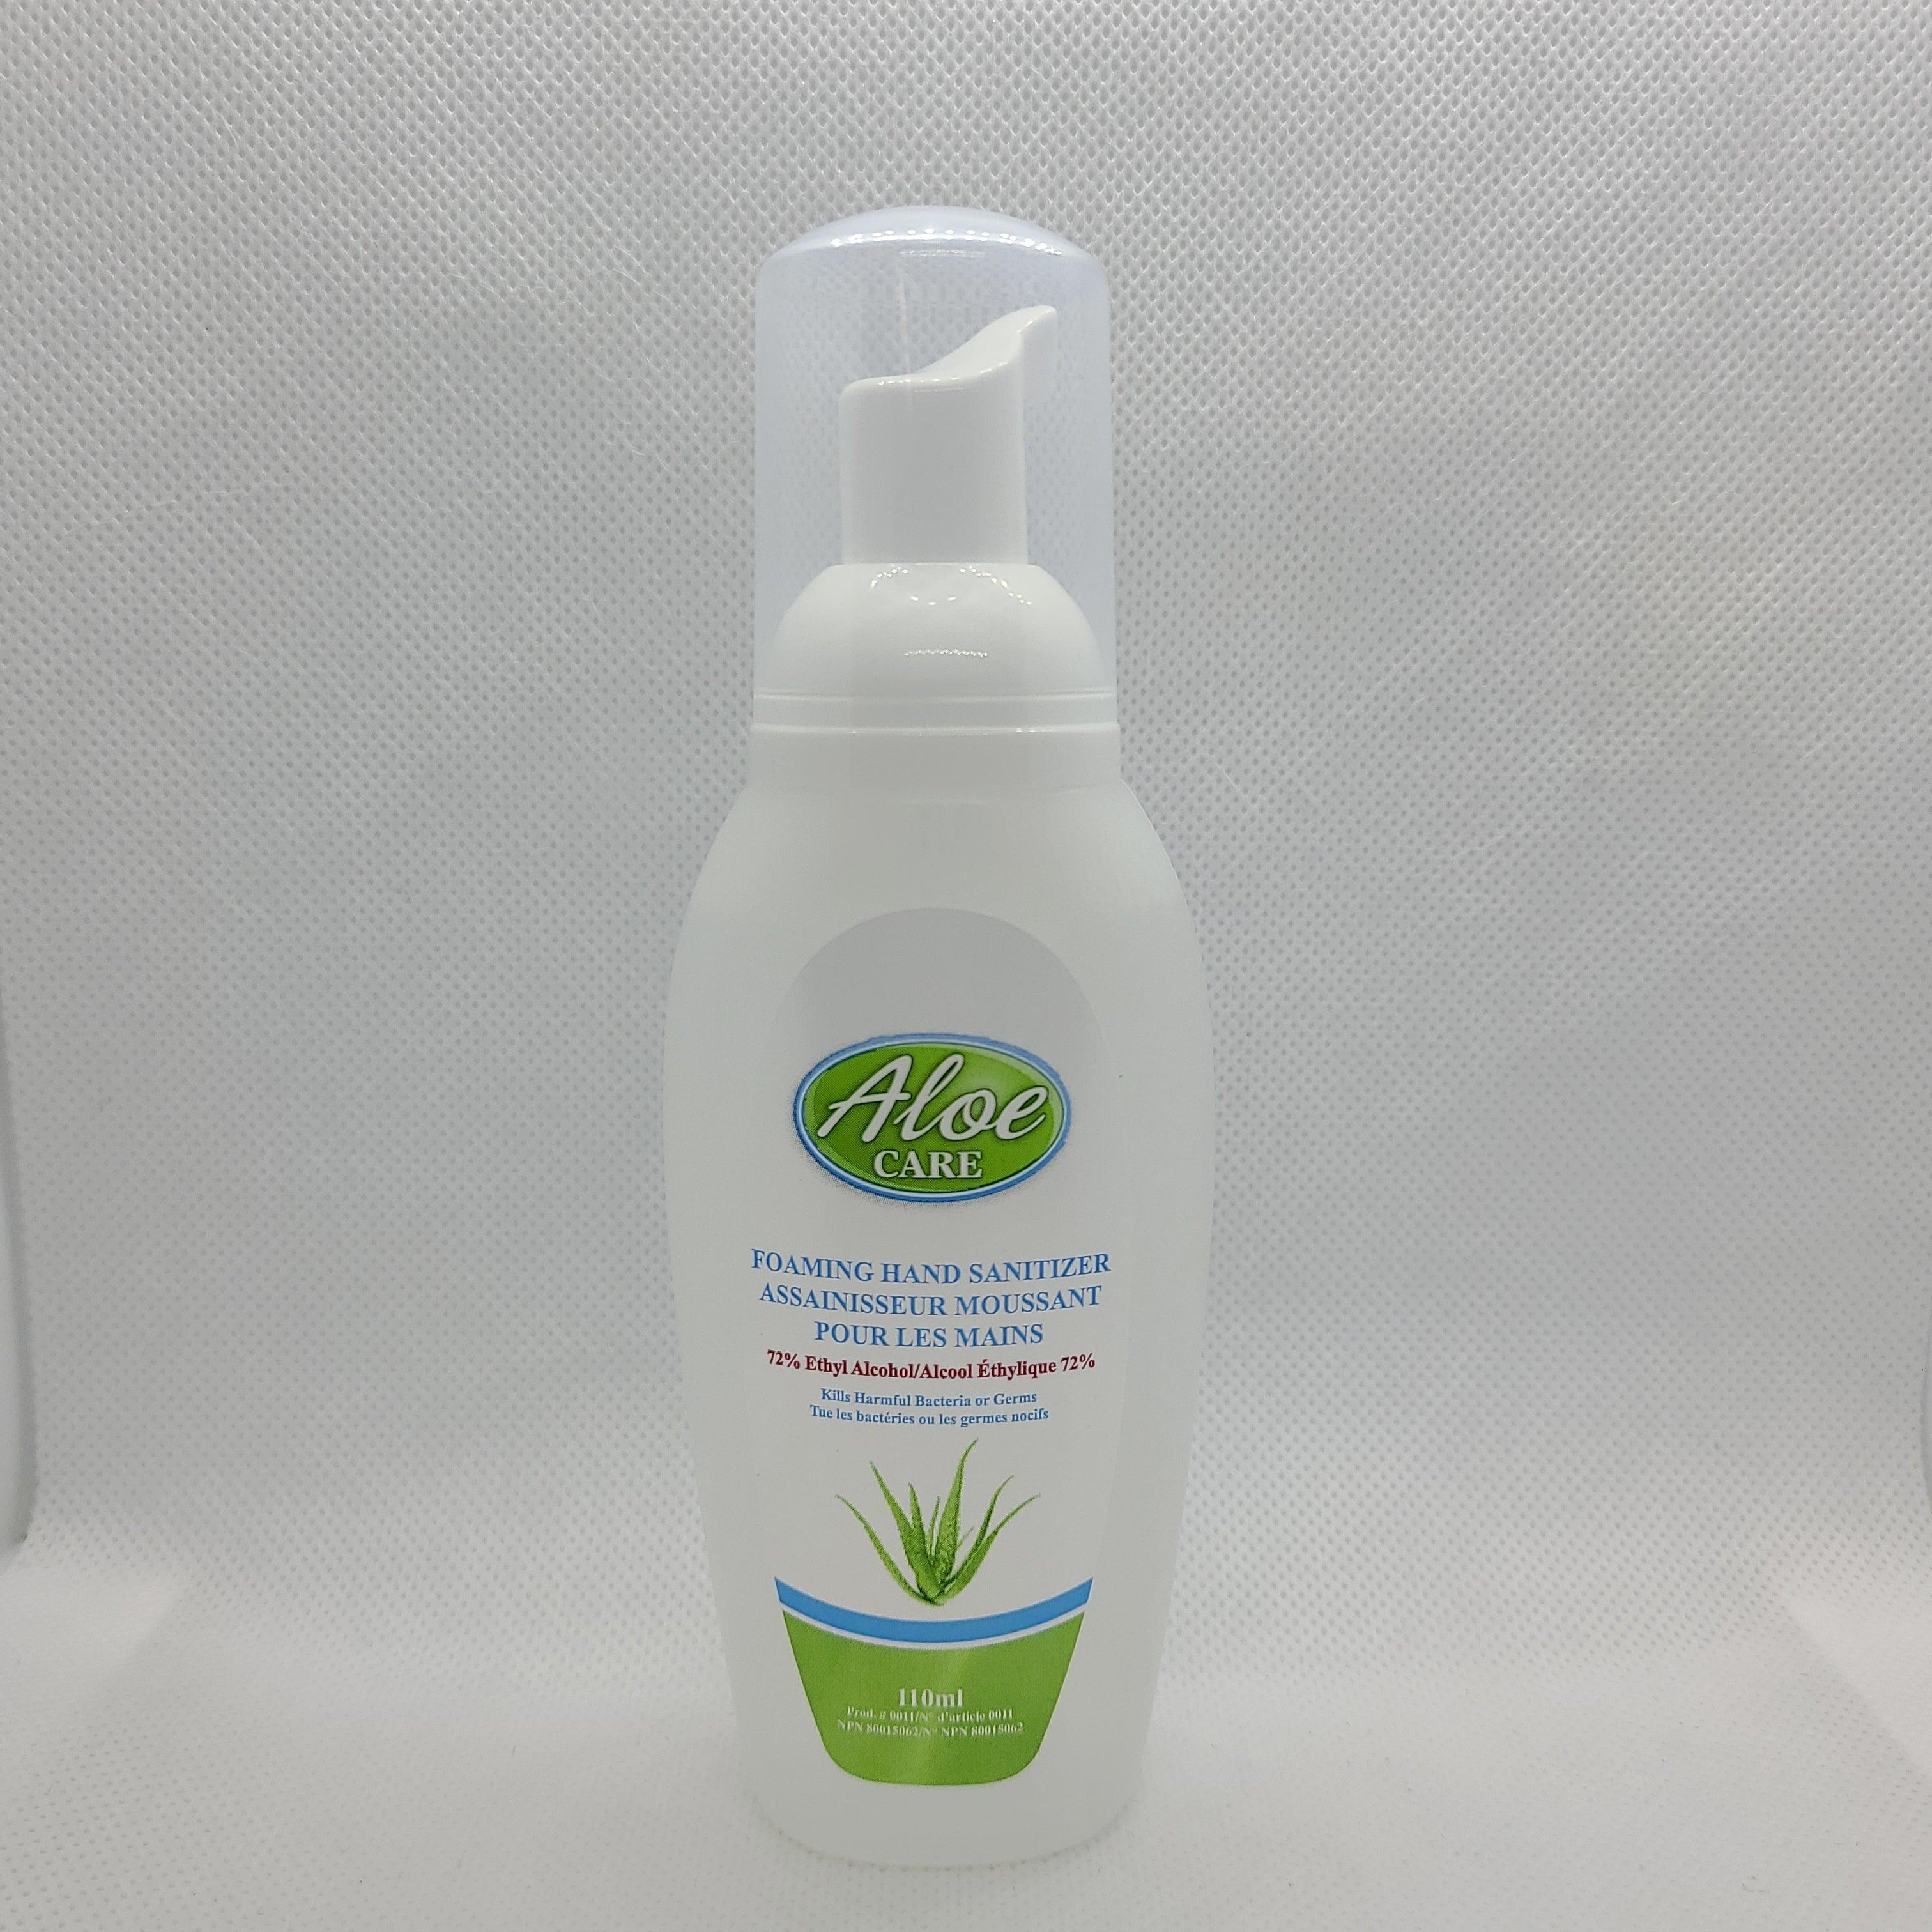 Aloe Care Foaming Hand Sanitizer (110ml)